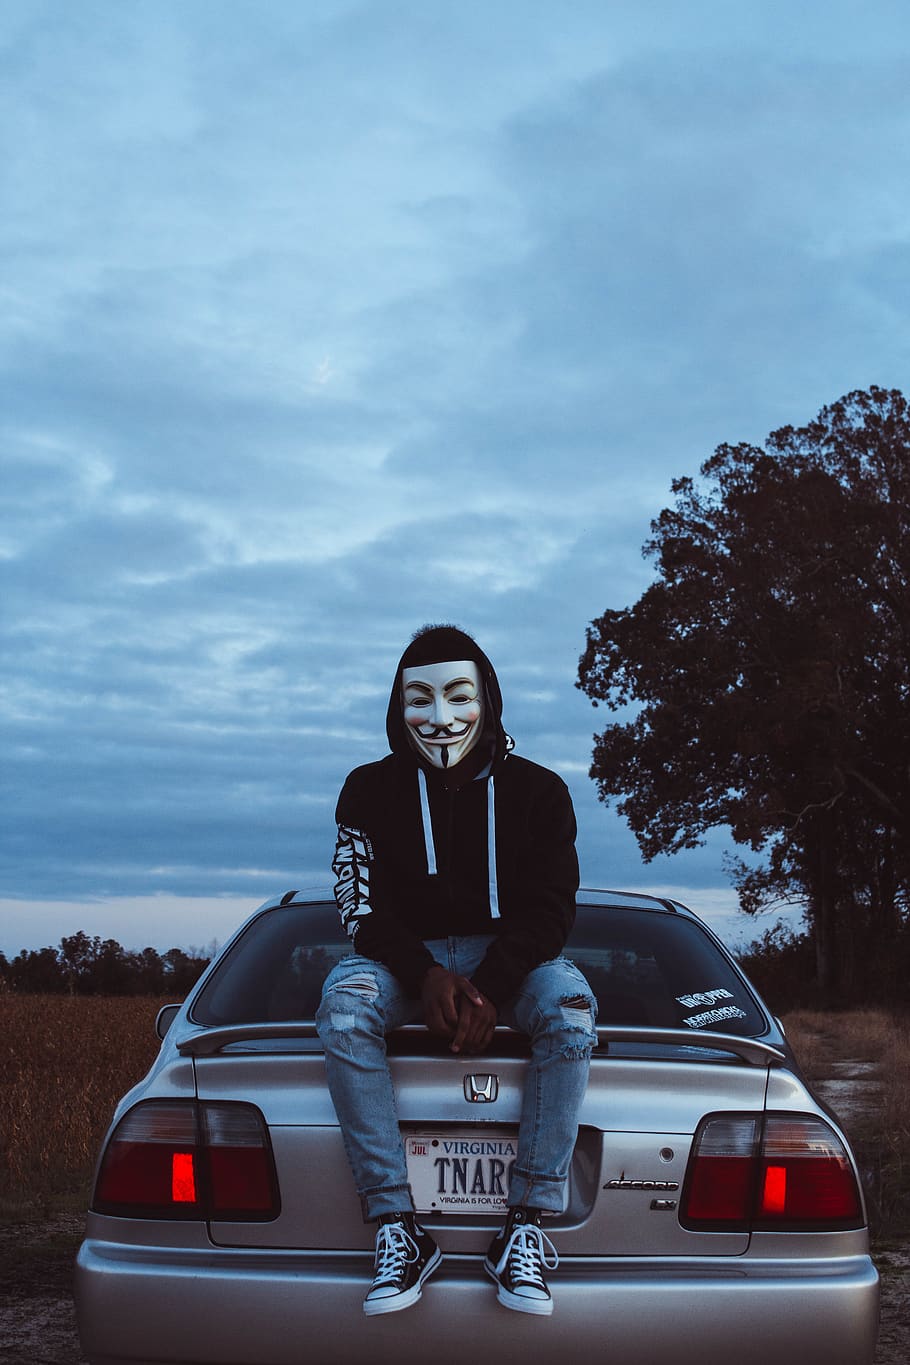 Man Wearing Guy Fawkes Mask While Sitting on Silver Honda Civic